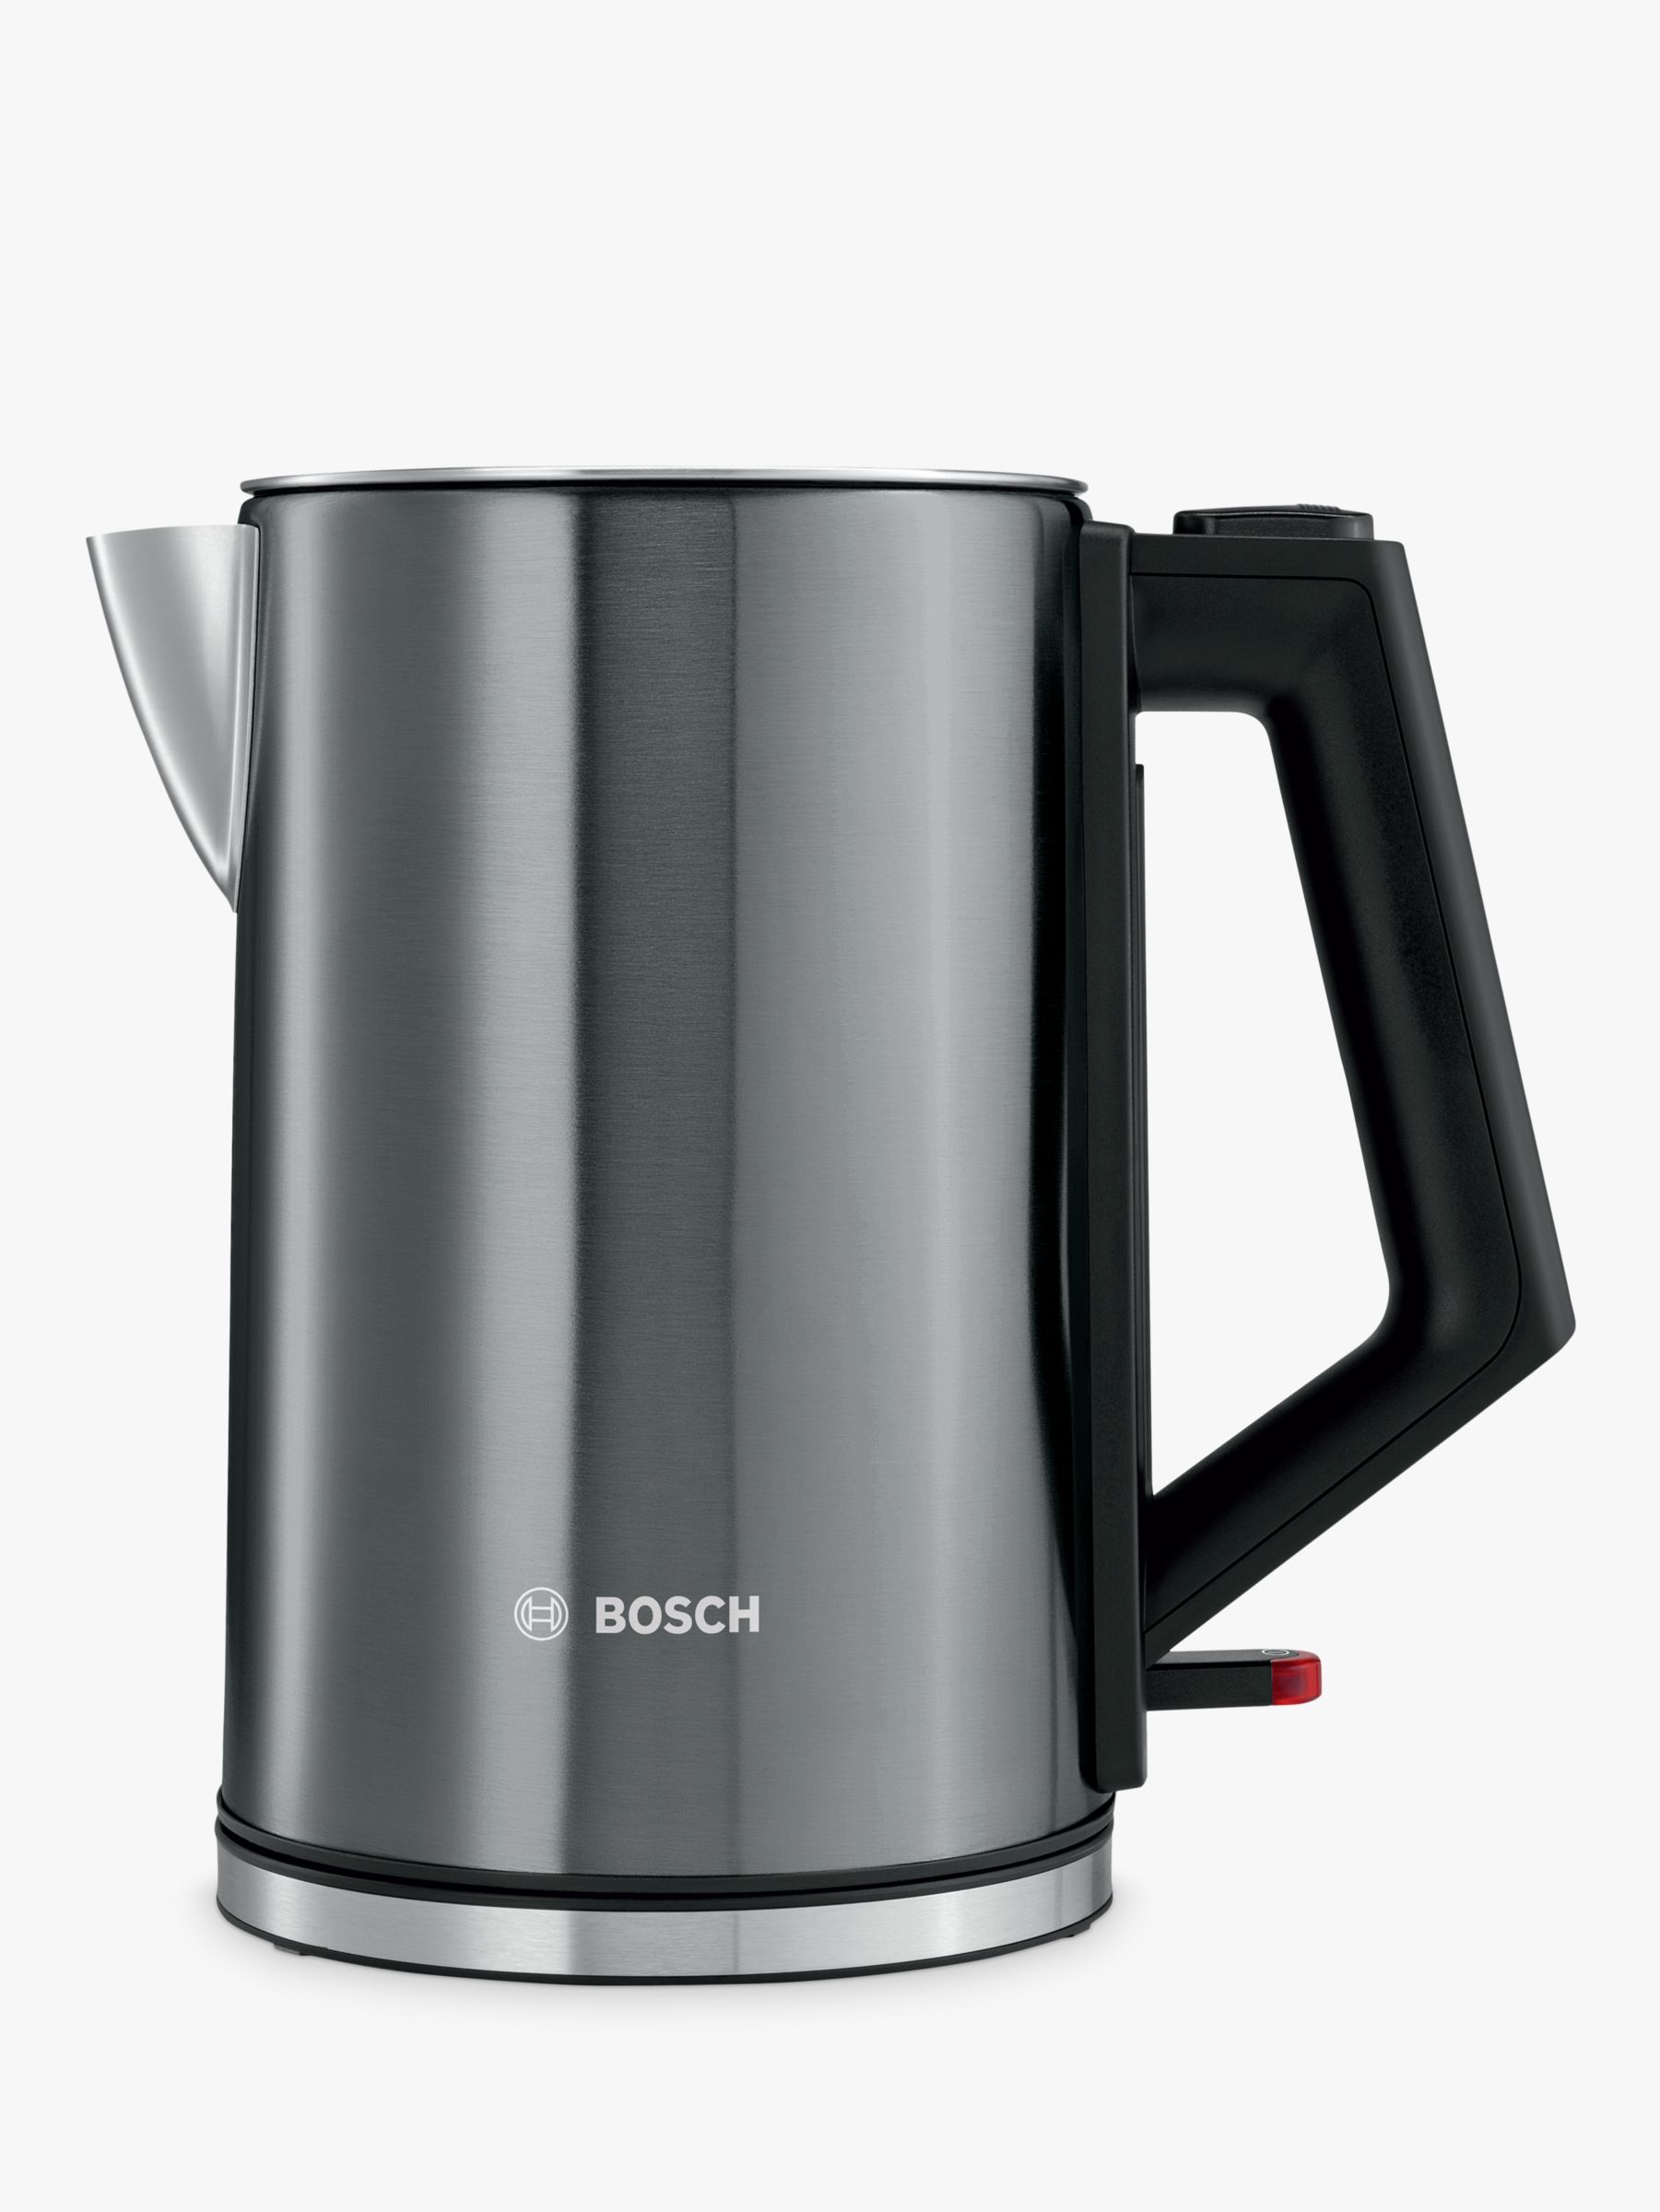 Bosch TWK7105GB Stainless Steel Kettle, Anthracite